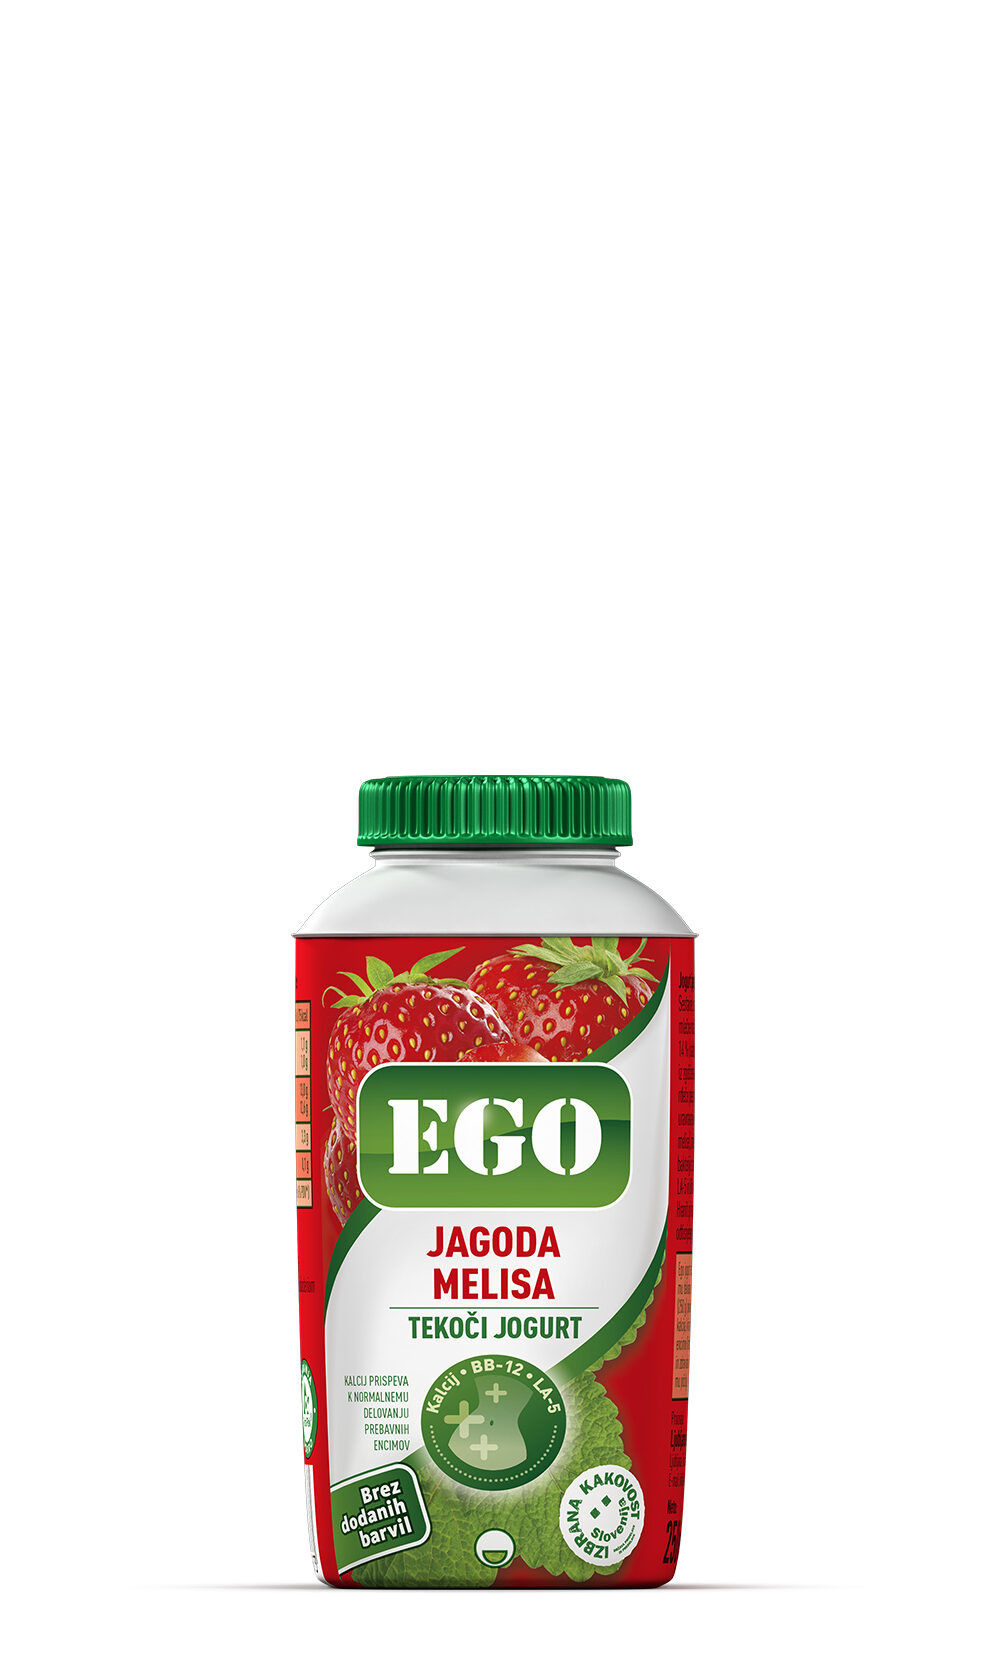 Ego, strawberry, lemon balm